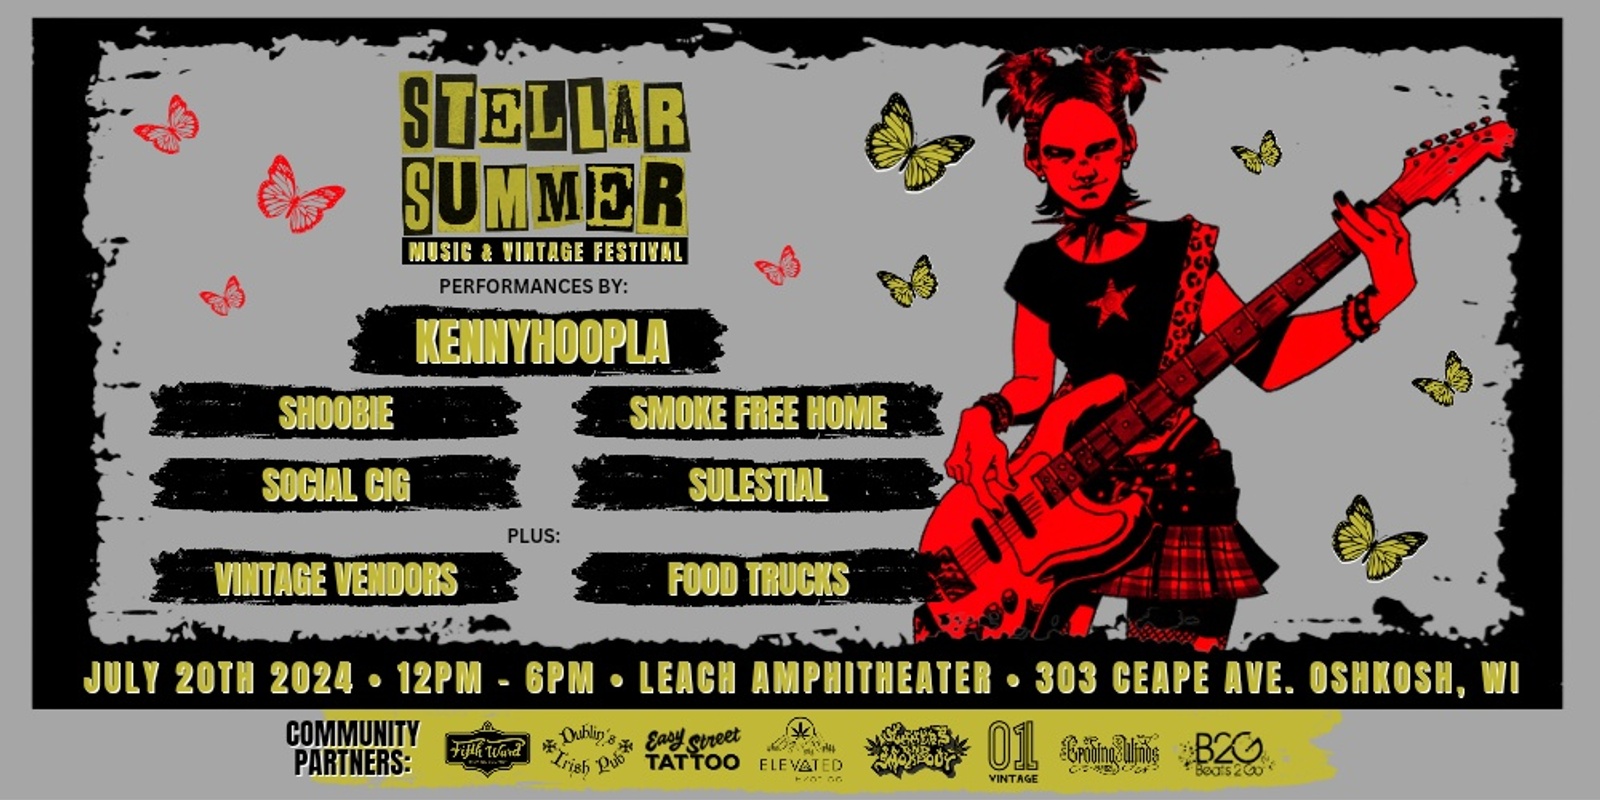 Banner image for Stellar Summer Music & Vintage Festival